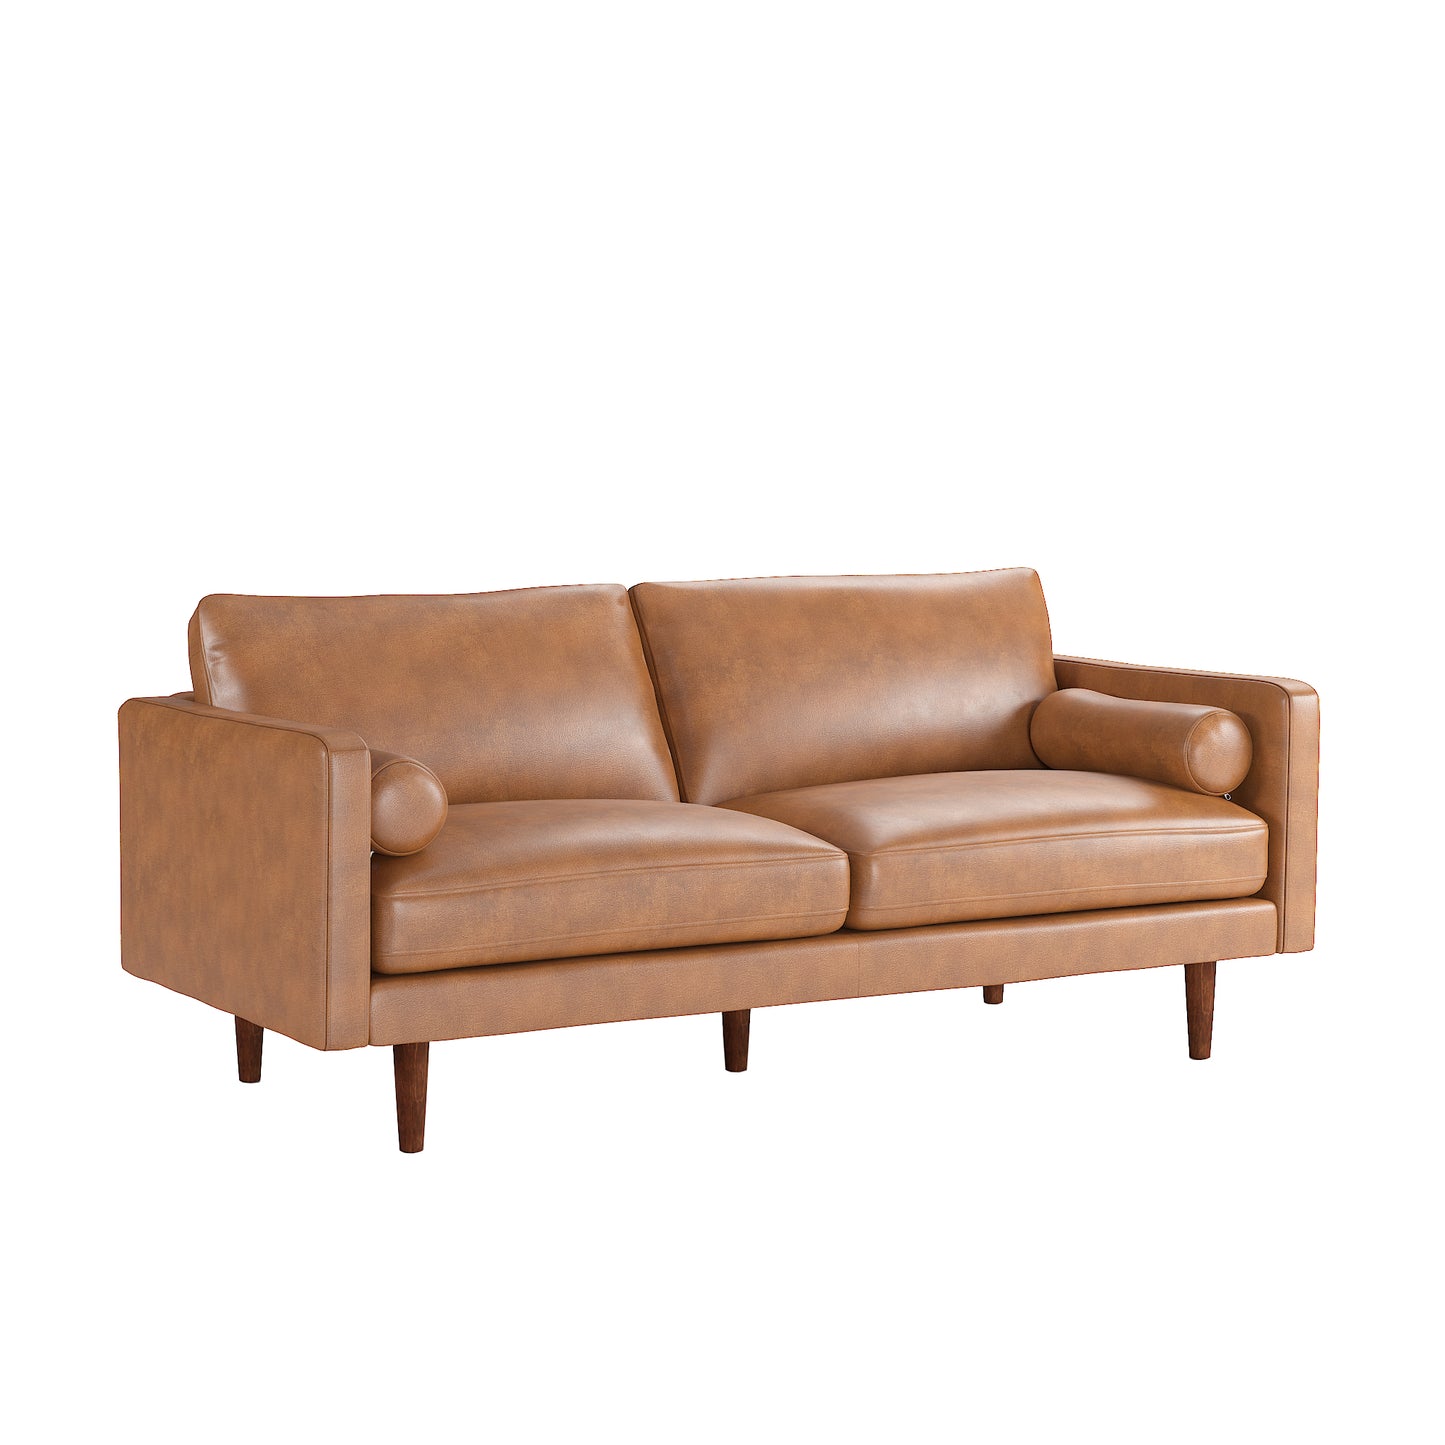 Mid-Century Faux Leather Sofa - Caramel